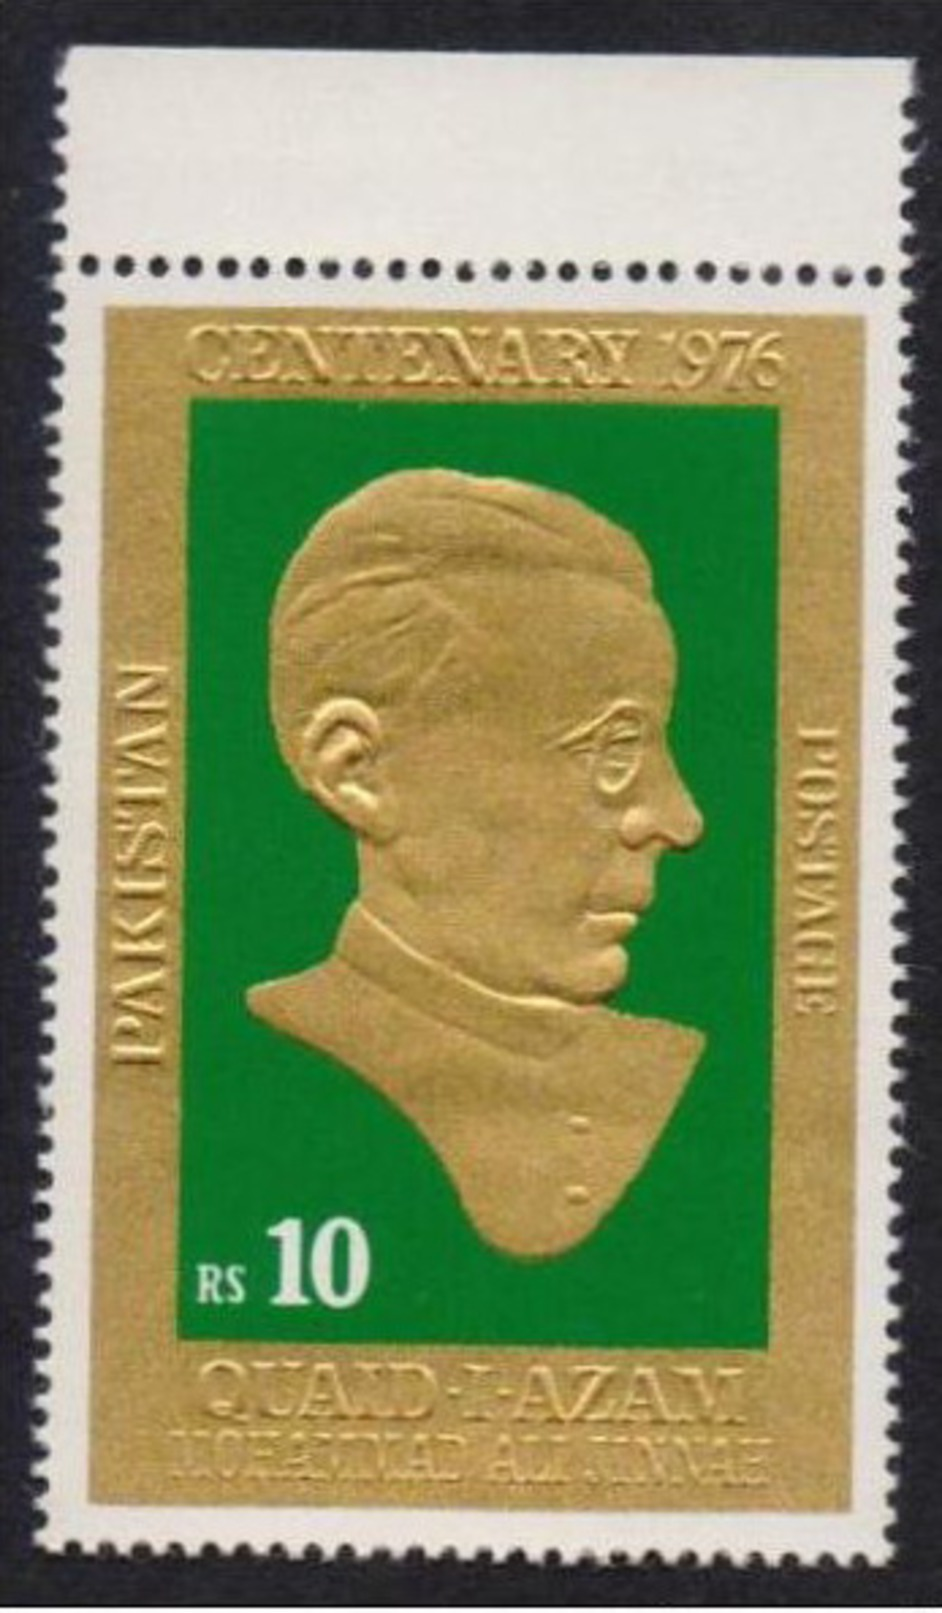 1976 Pakistan Quaid-i-Azam Centenary Gold Stamp (1v) MNH (PK-20) - Pakistan